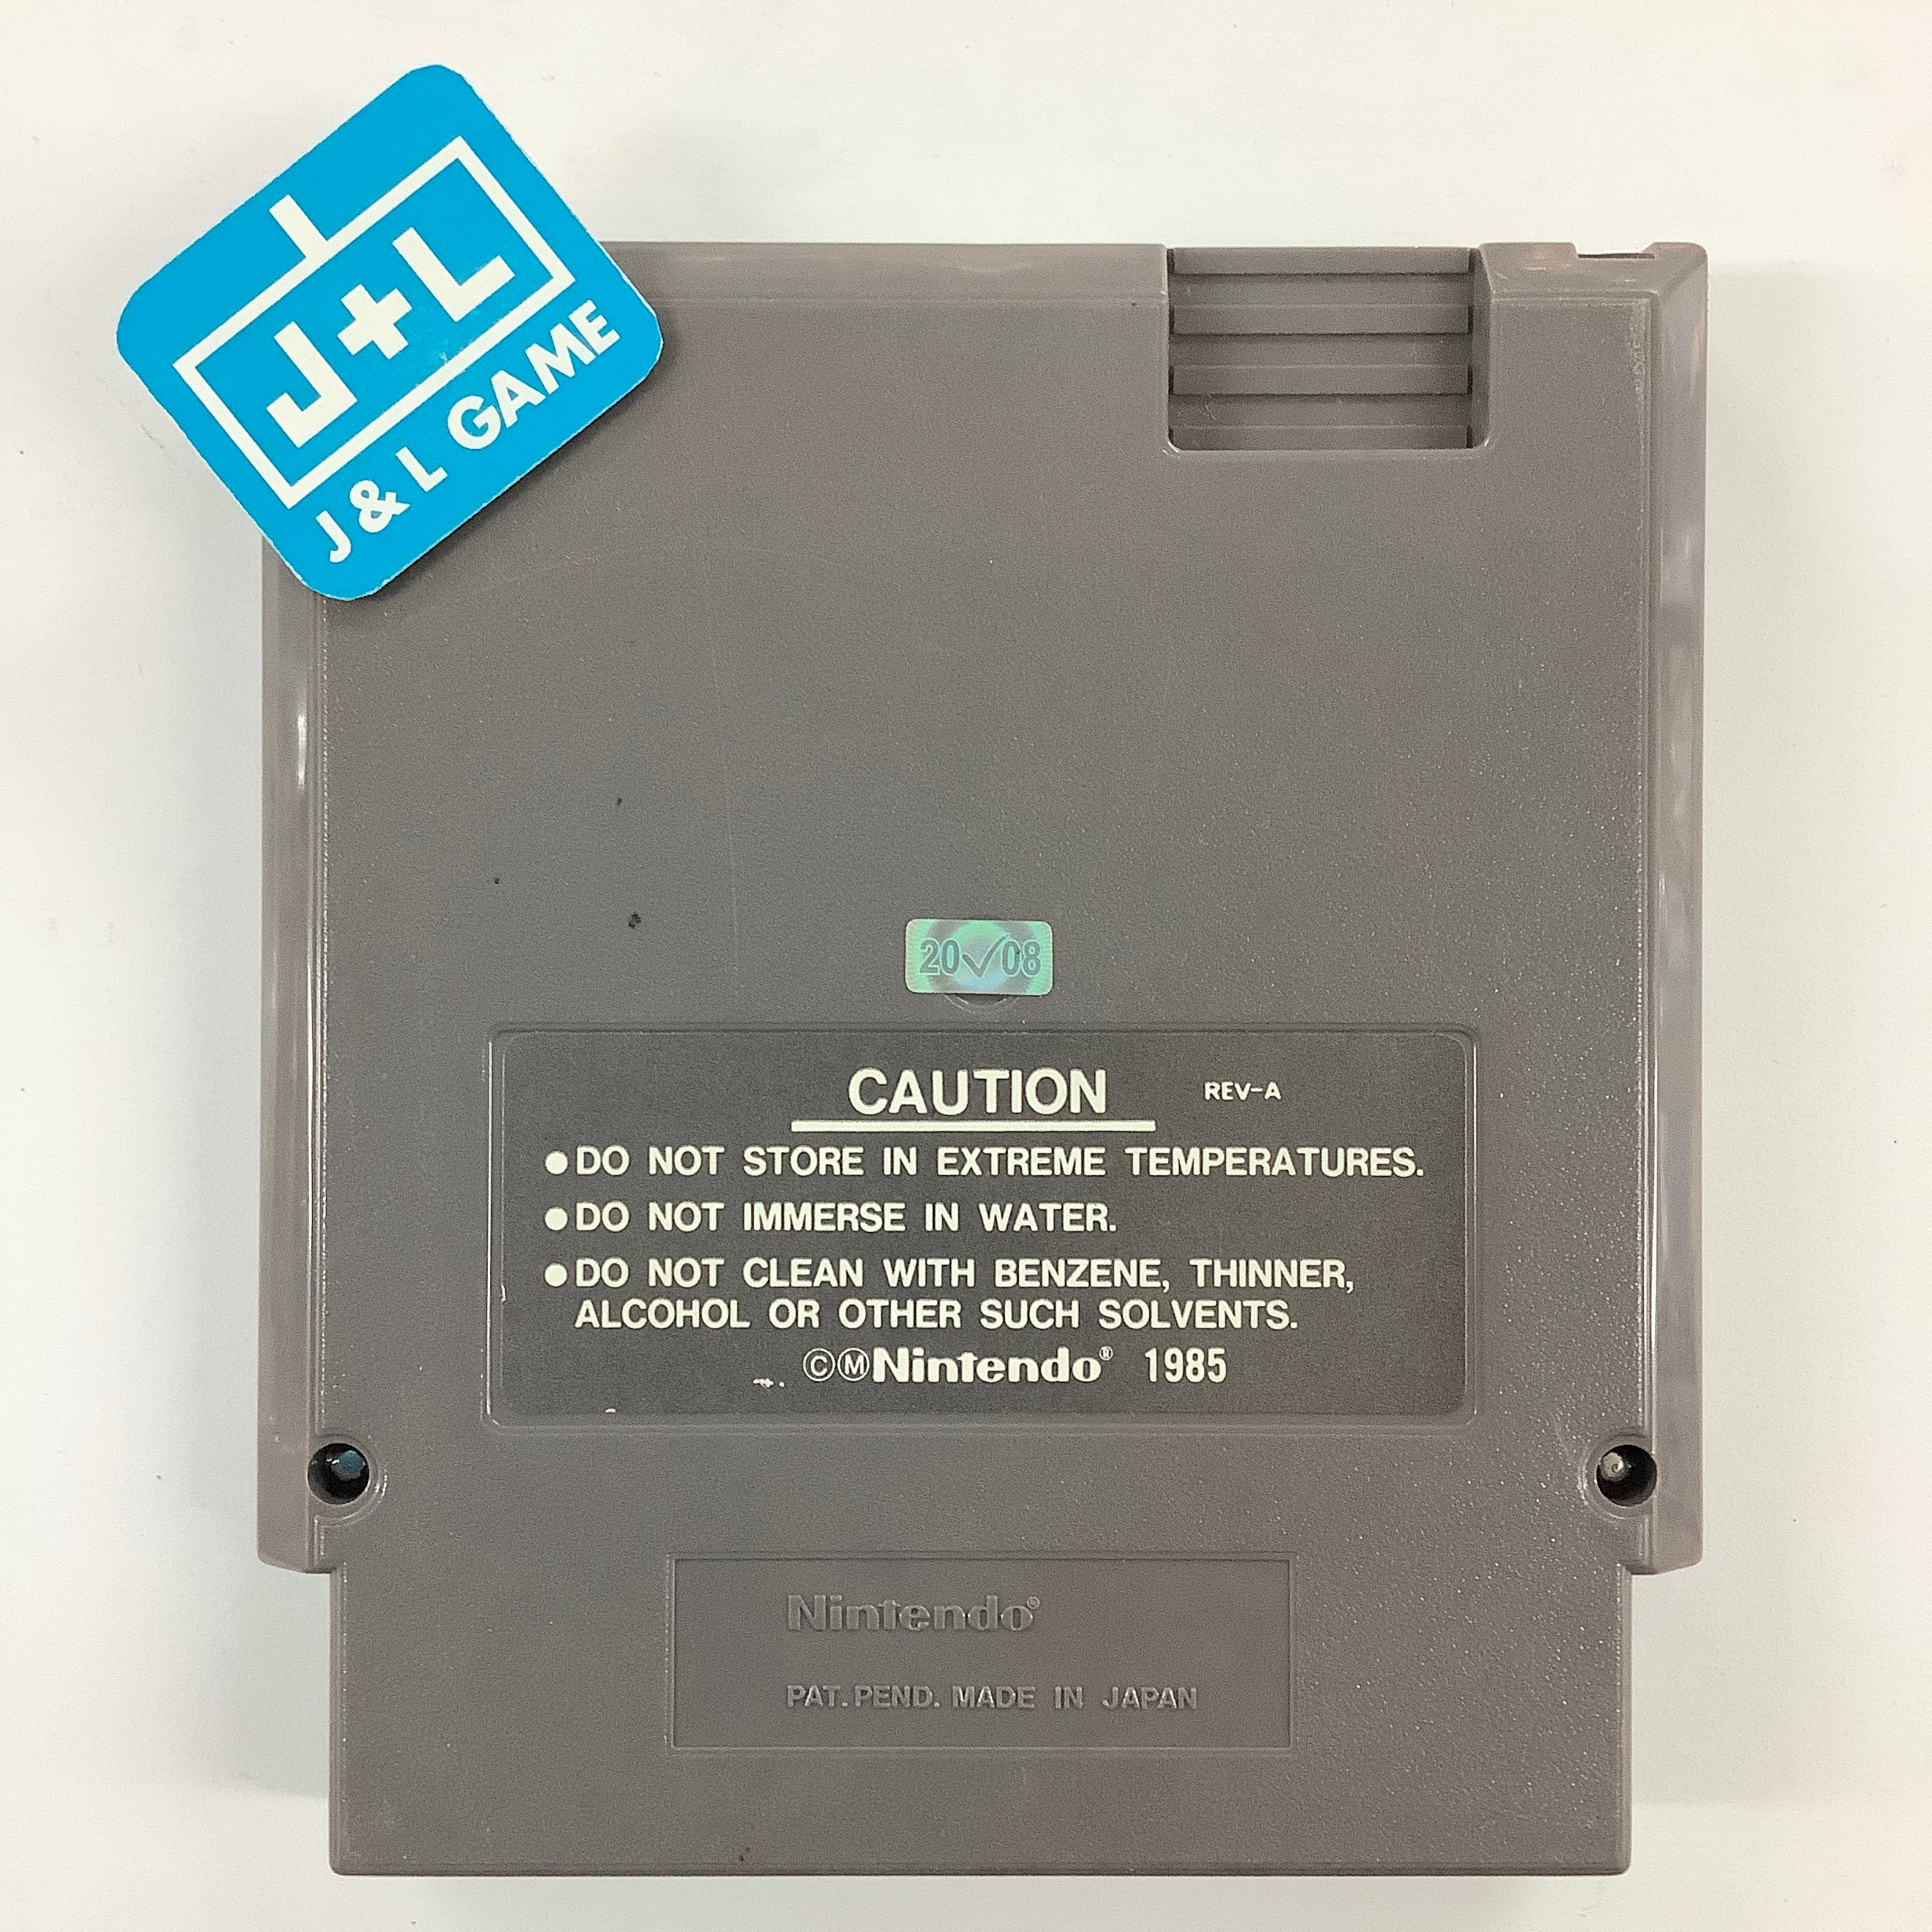 American Gladiators - (NES) Nintendo Entertainment System [Pre-Owned] Video Games GameTek   